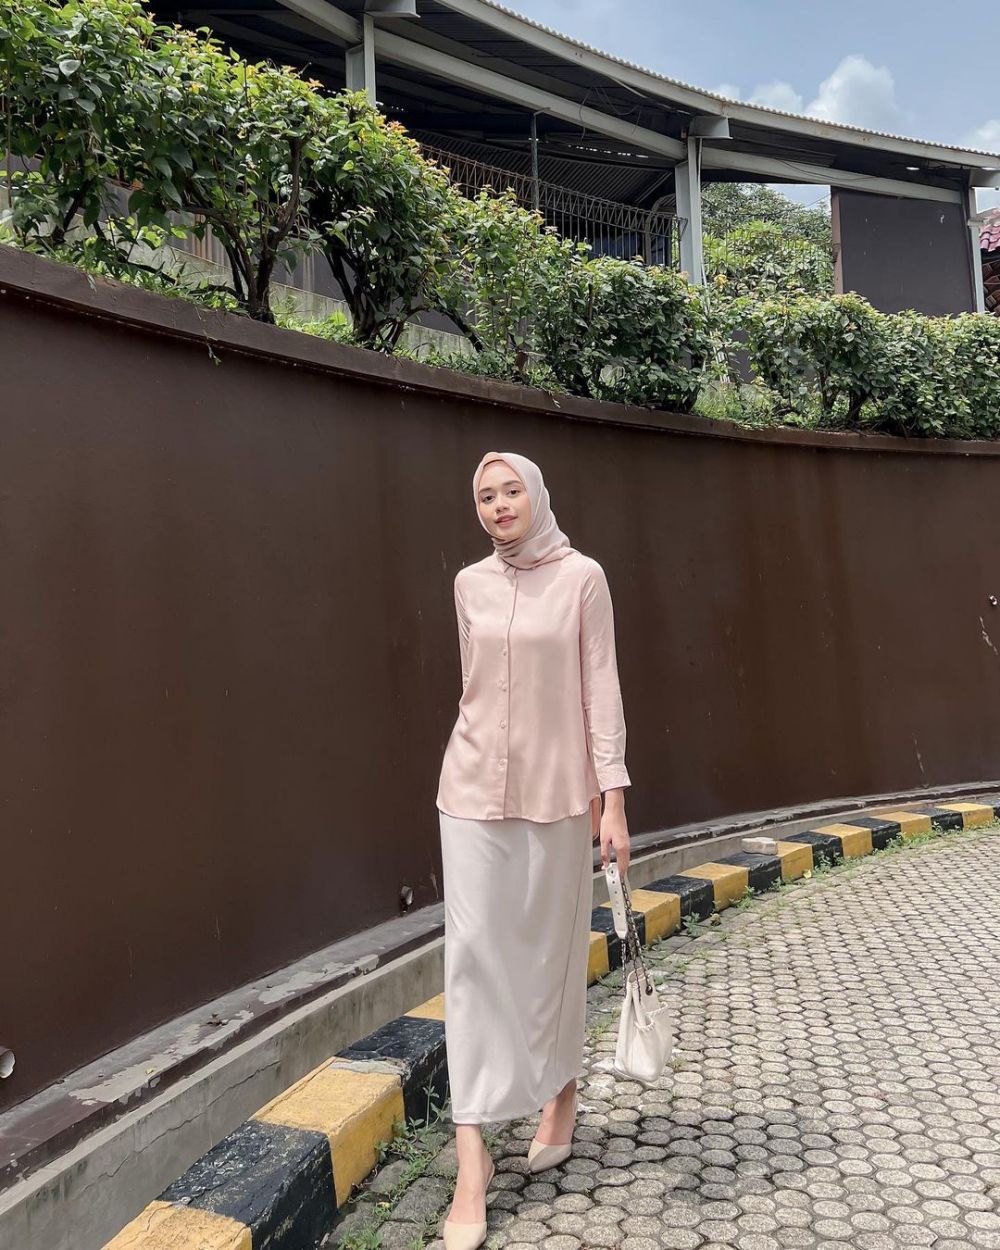 9 Inspirasi Outfit Hijab Ke Kantor ala Nazlia Rahma, Super Stylish!